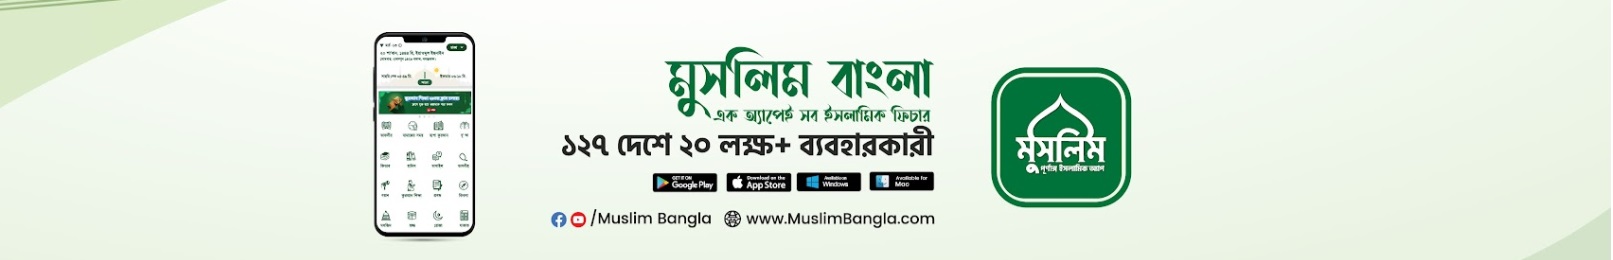 Muslim Bangla